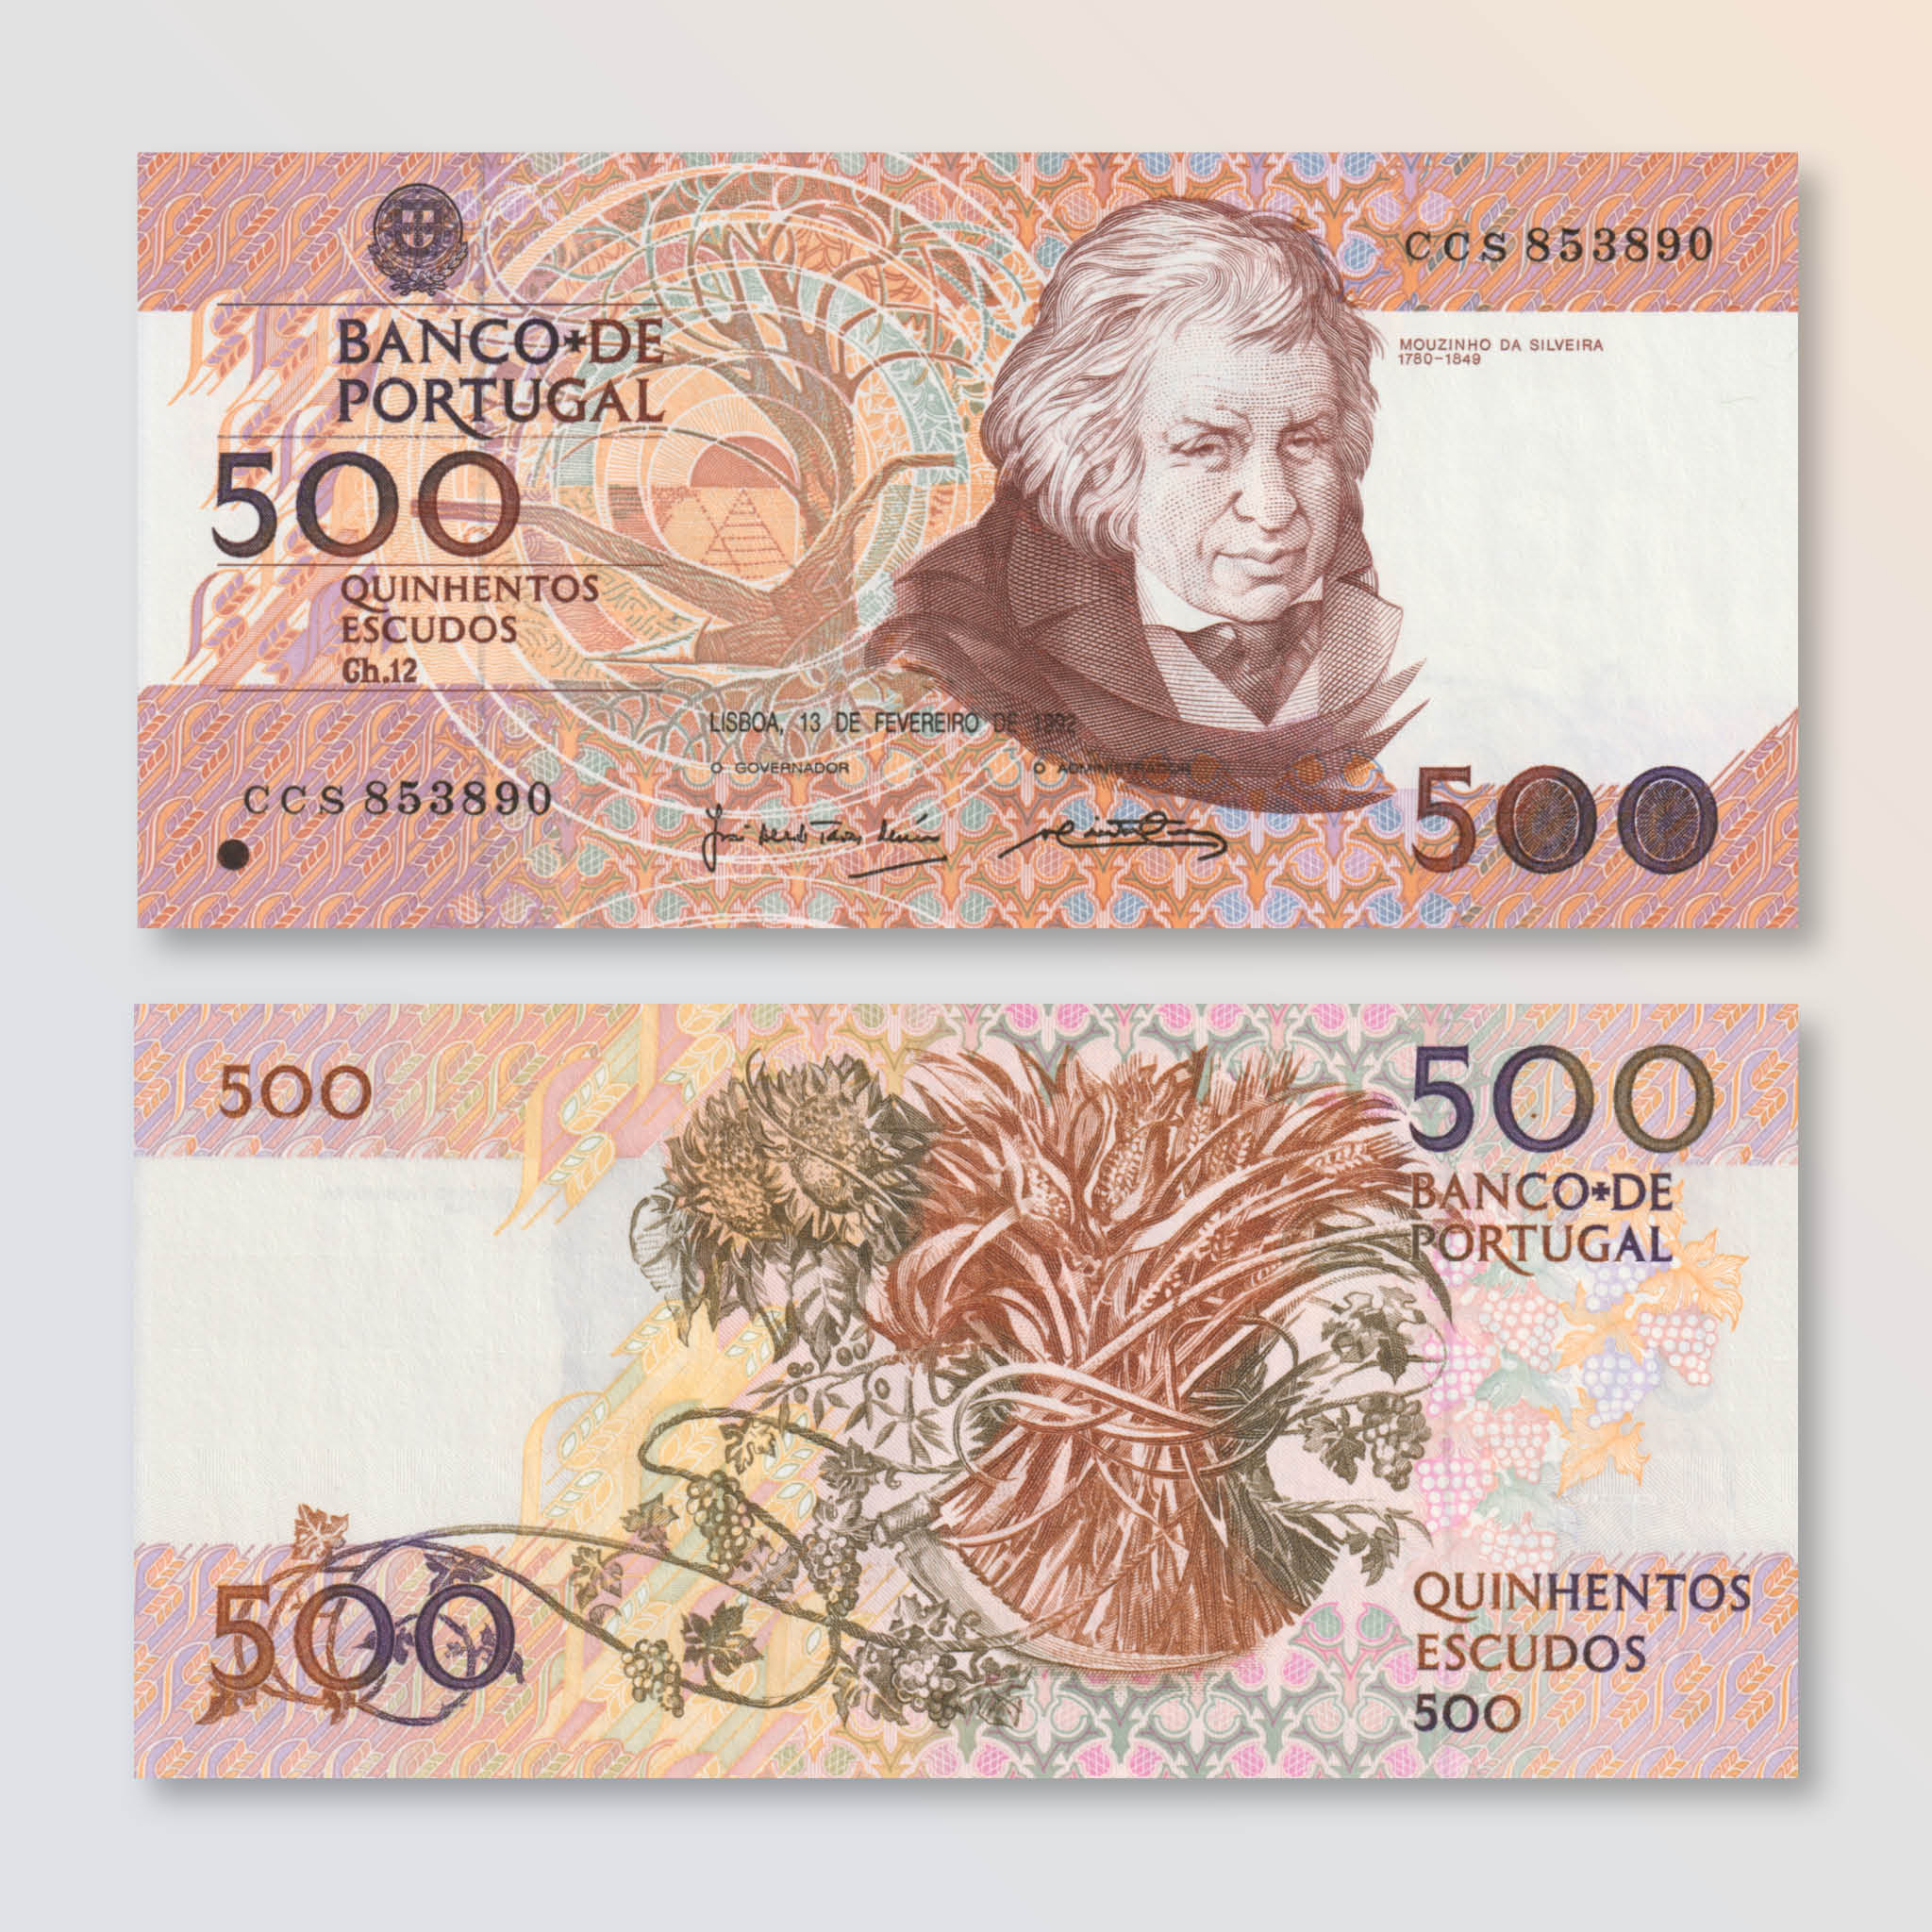 Portugal 500 Escudos, 1992, P180d, UNC - Robert's World Money - World Banknotes